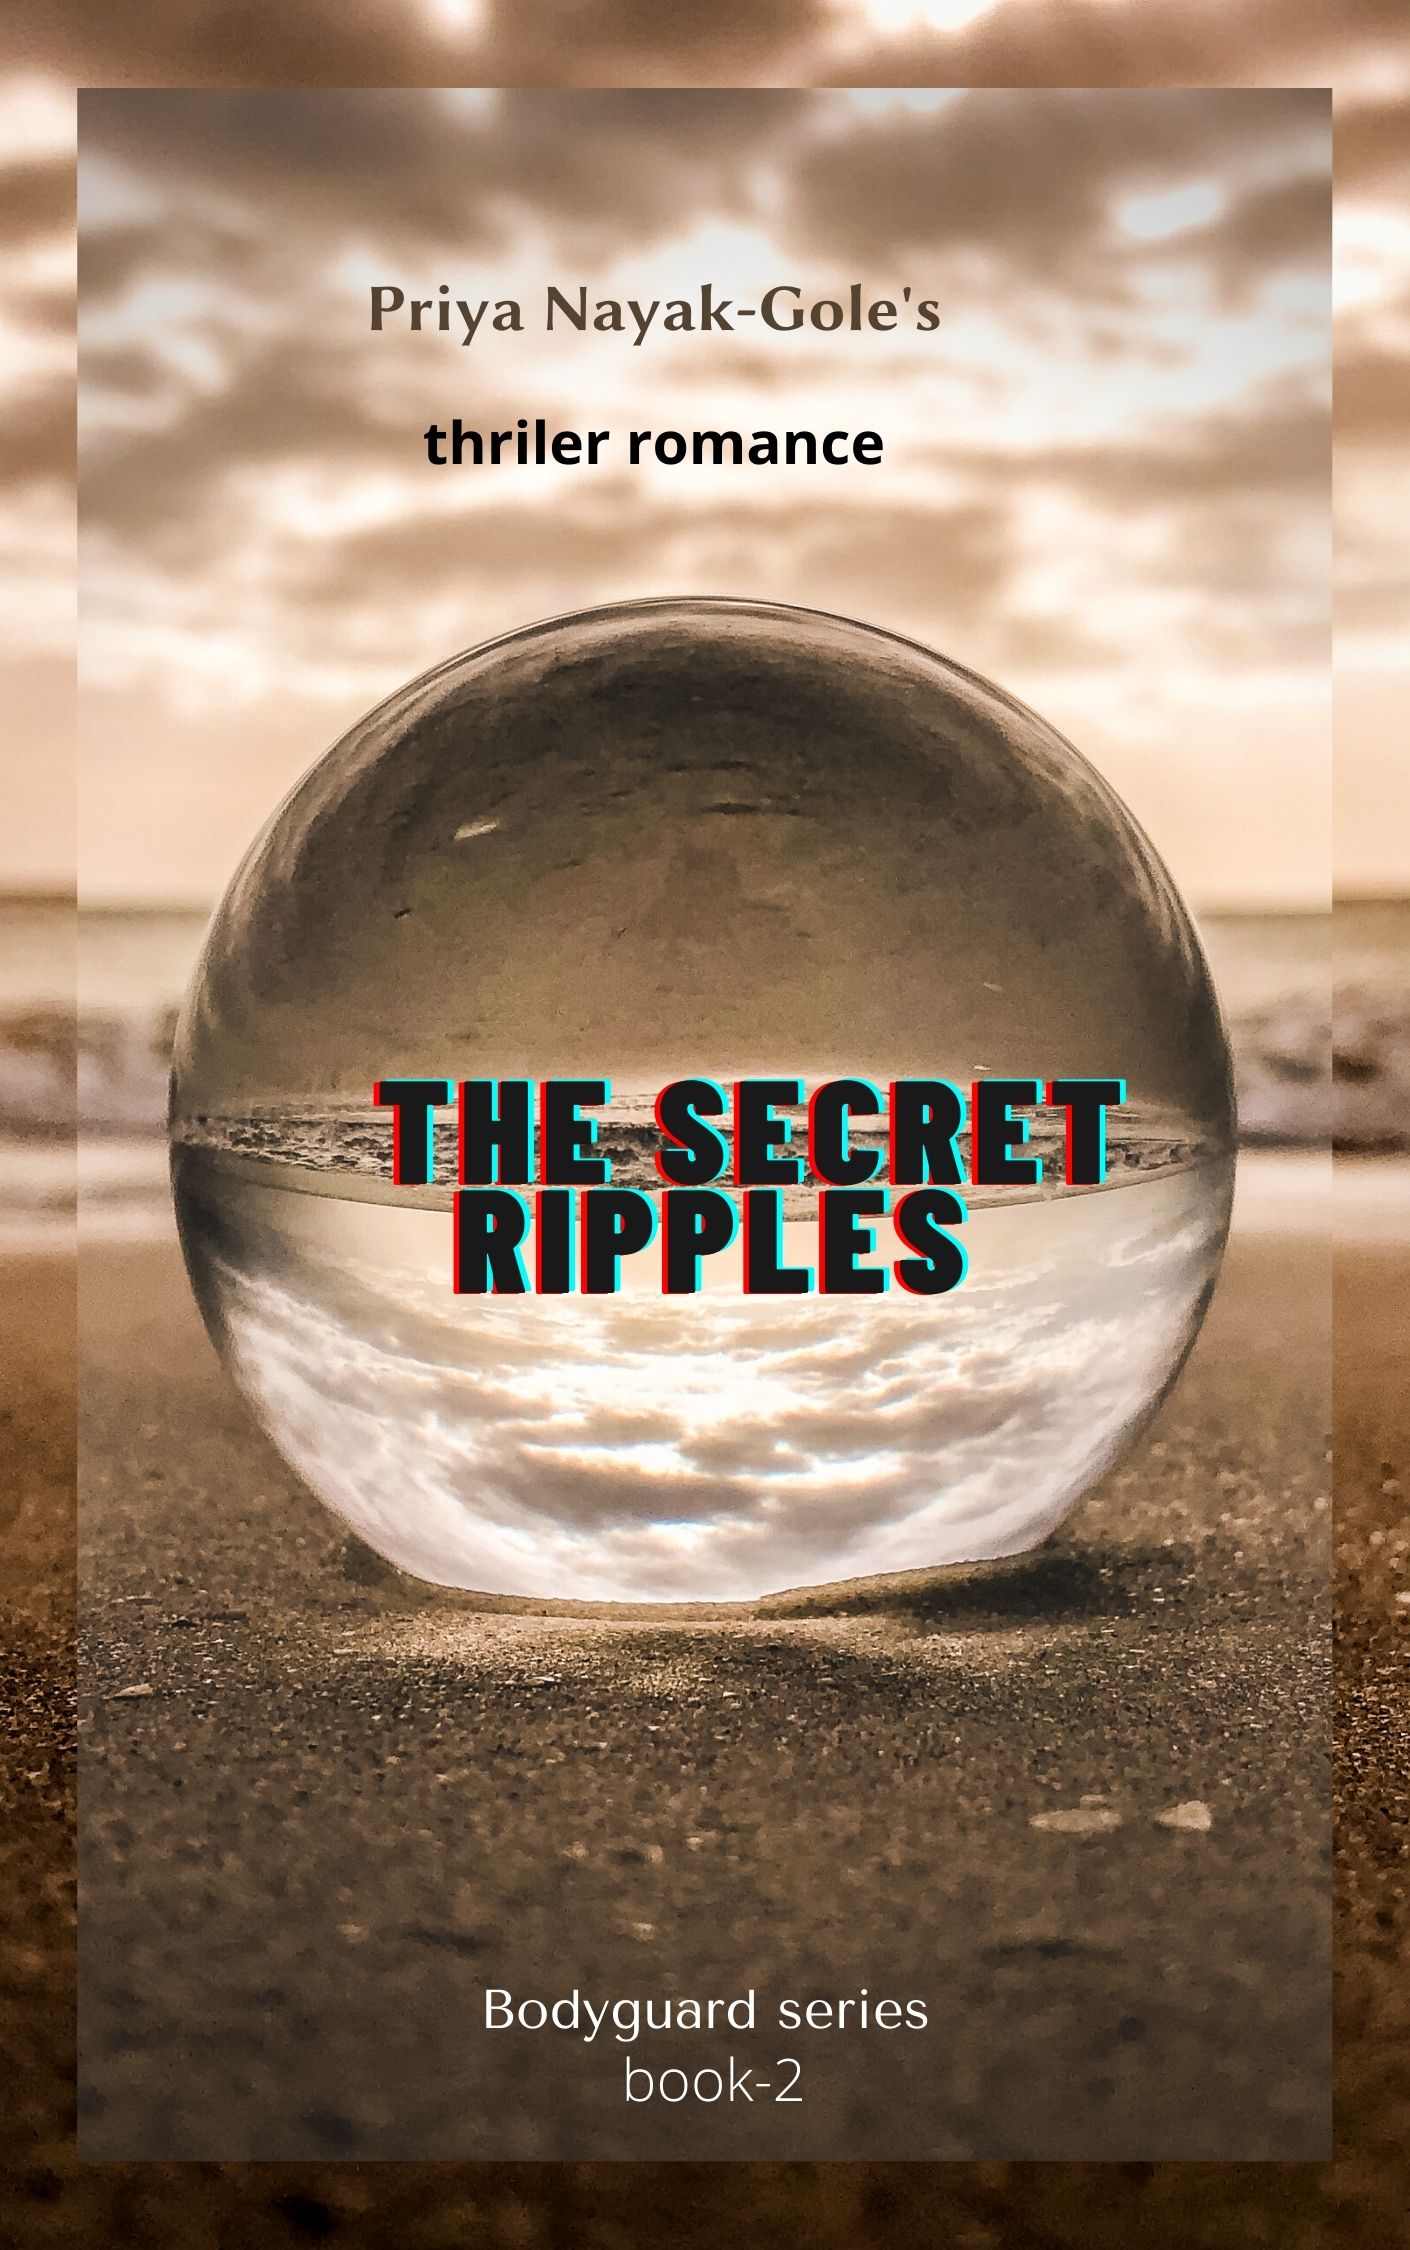 The Secret ripples